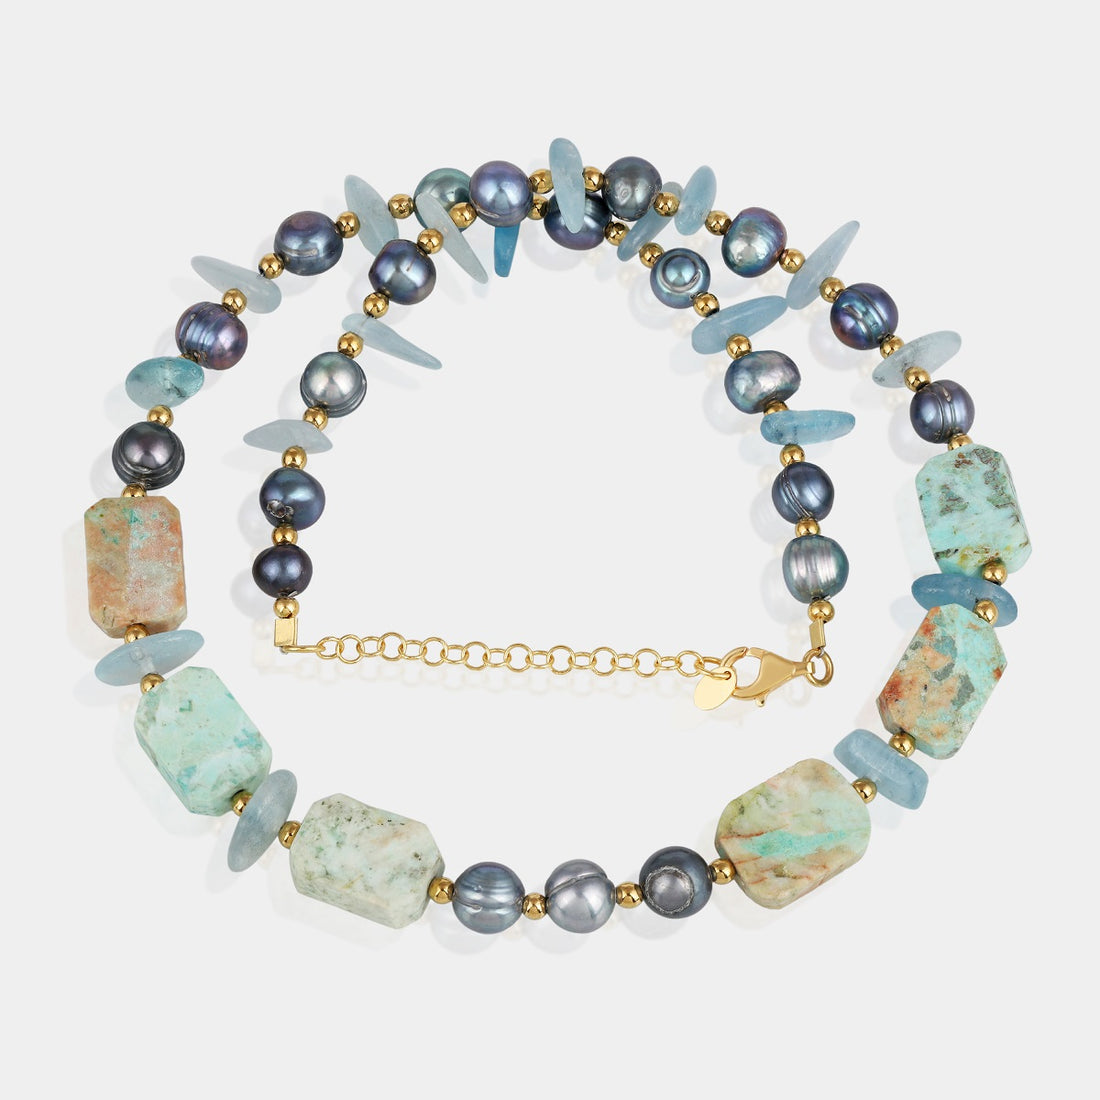 Handmade 925 Silver Necklace with Aquamarine Gemstone Beads